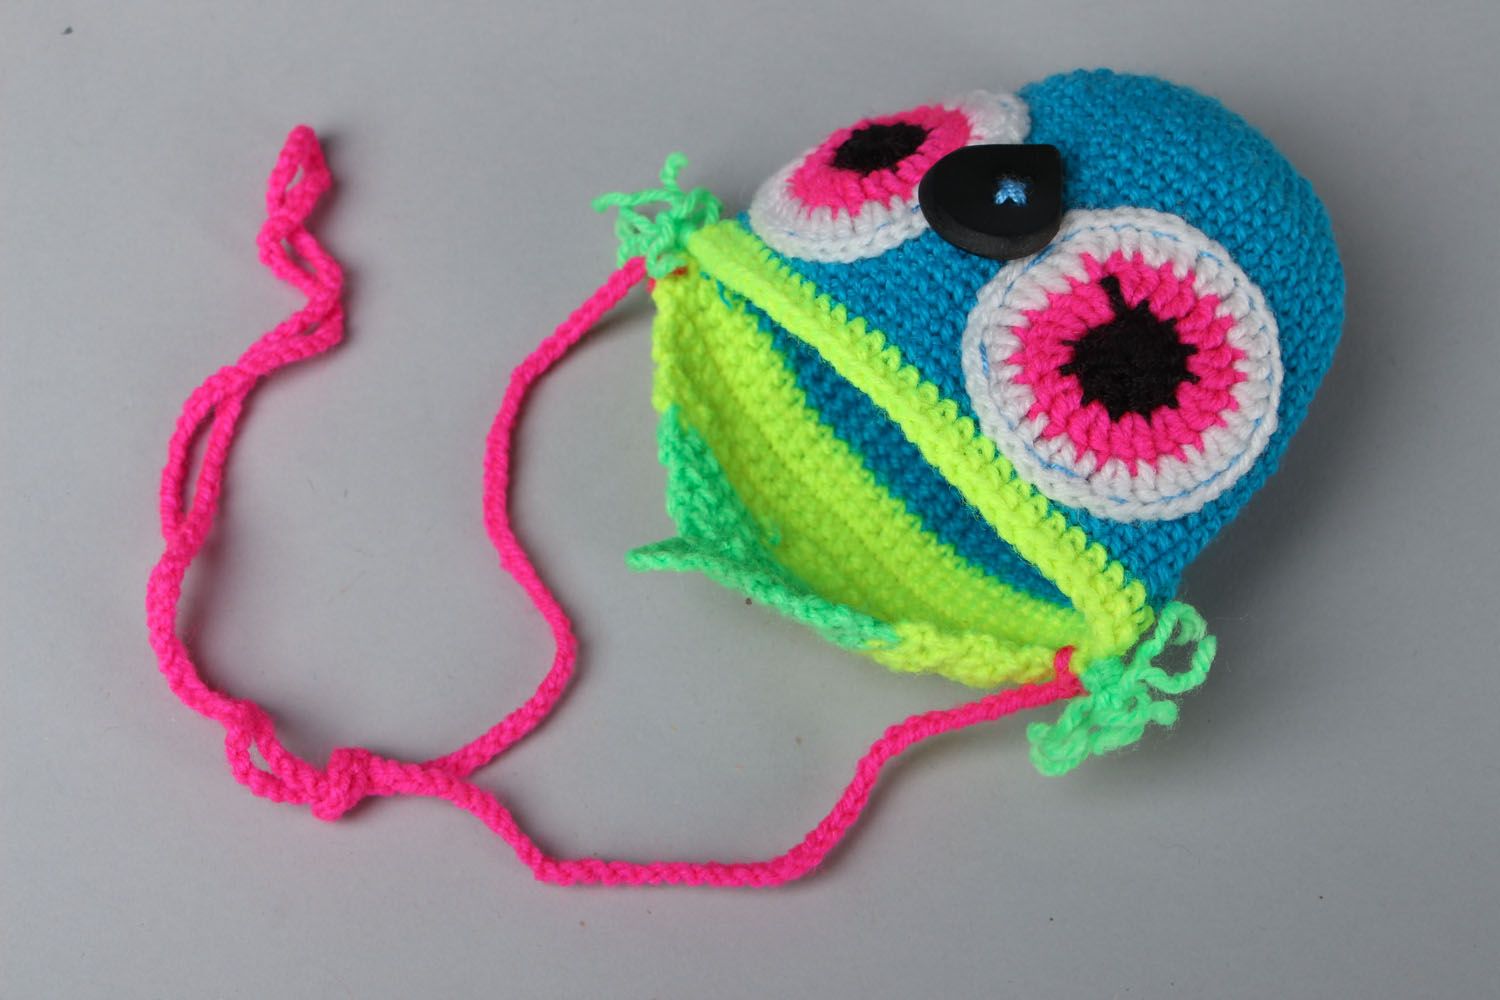 Kid's crochet bag photo 1